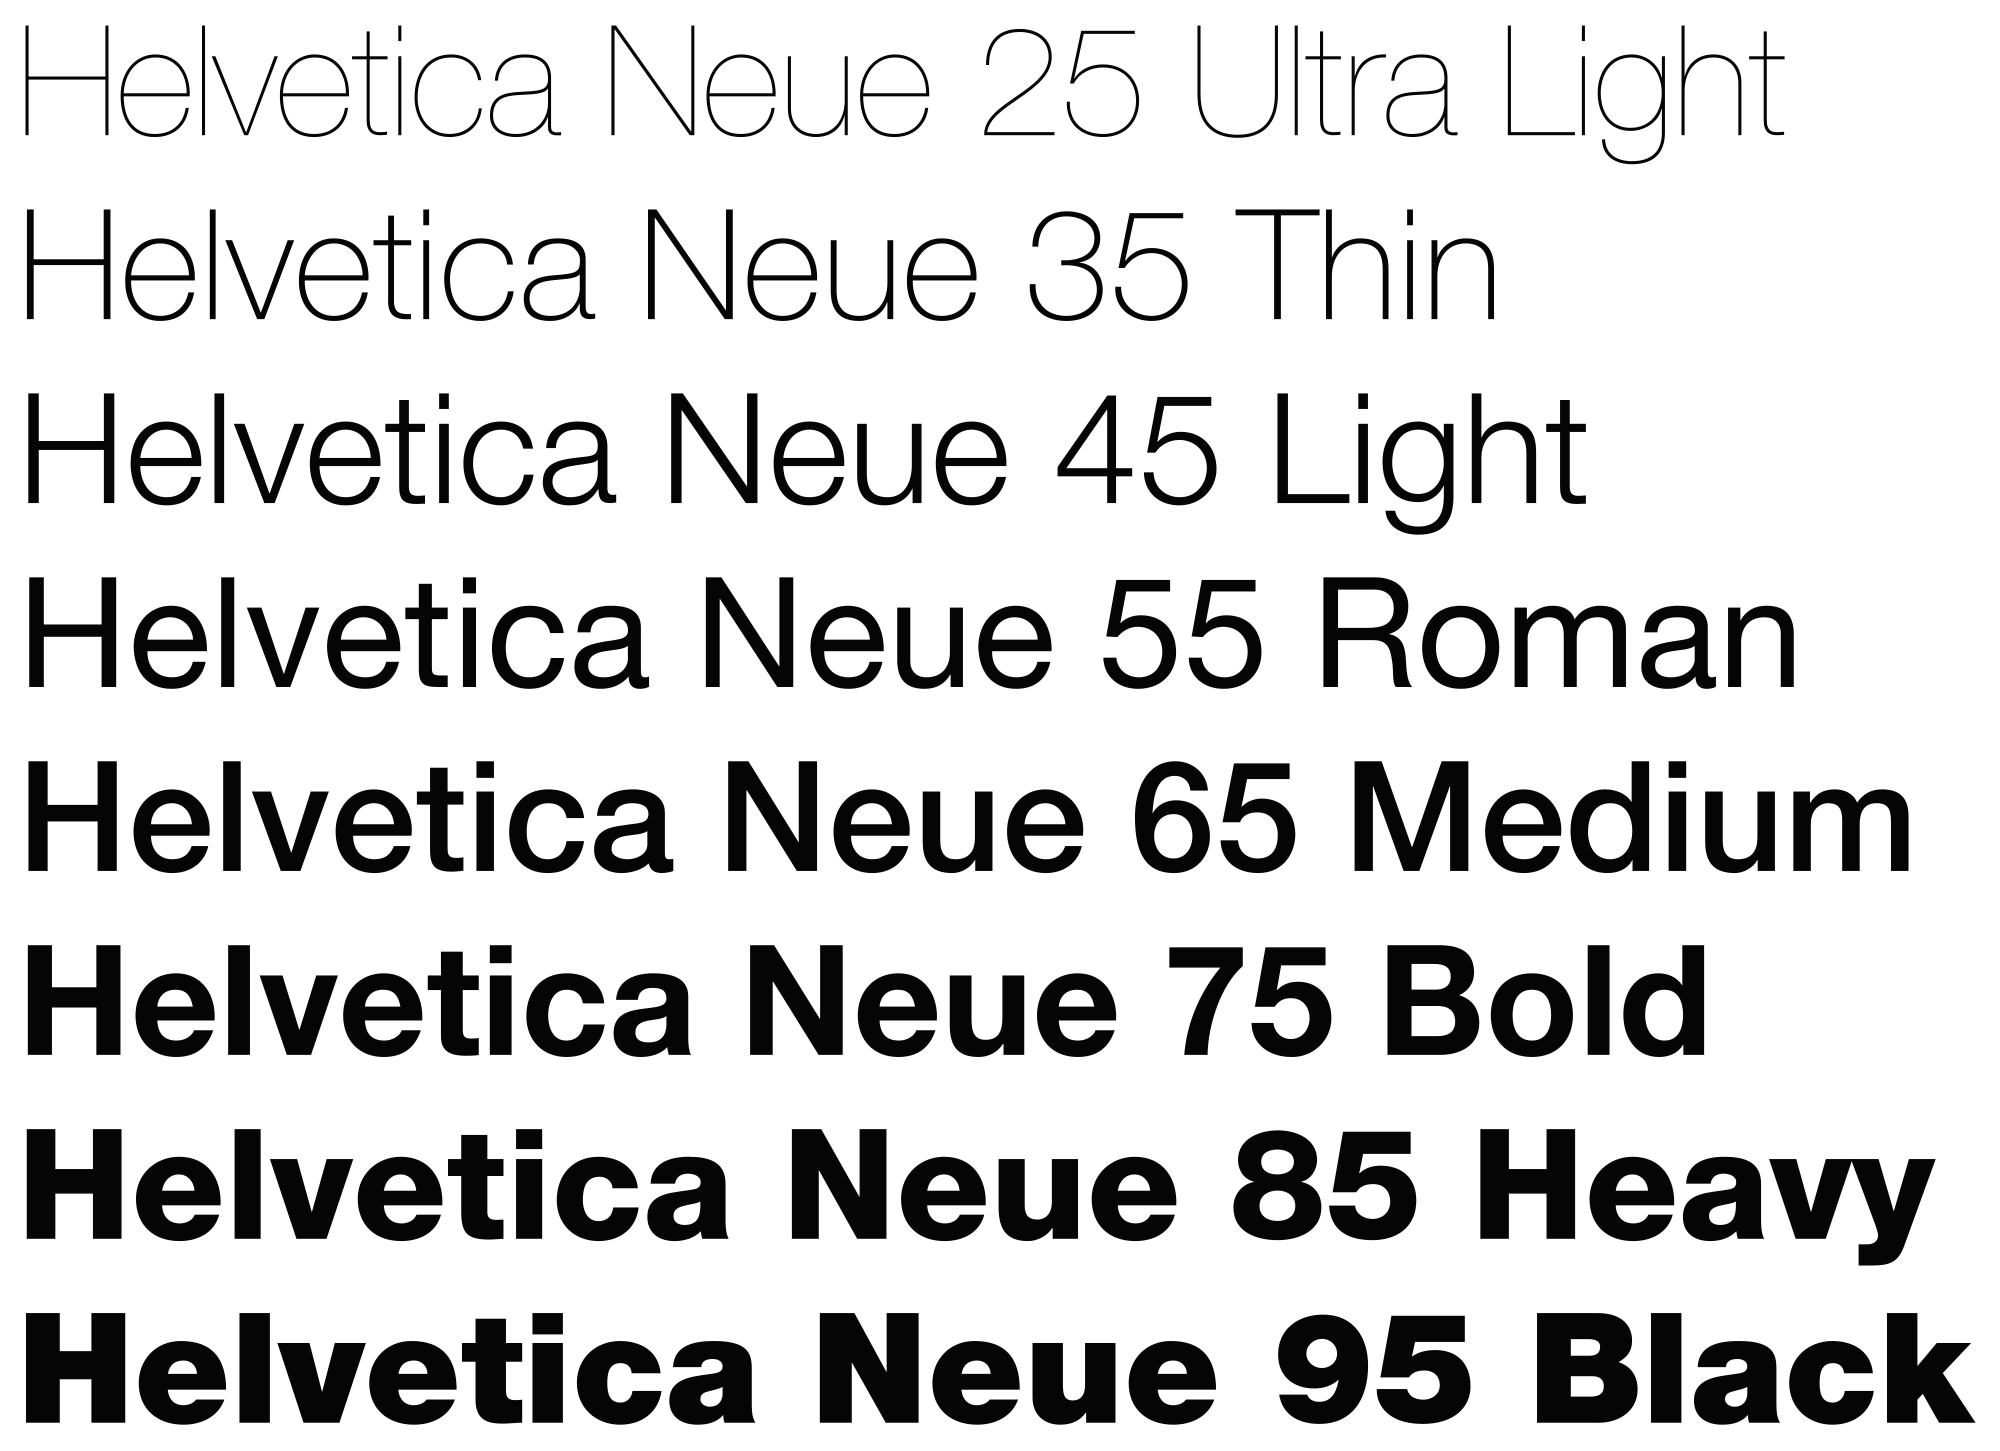 Helvetica (Wikipedia)